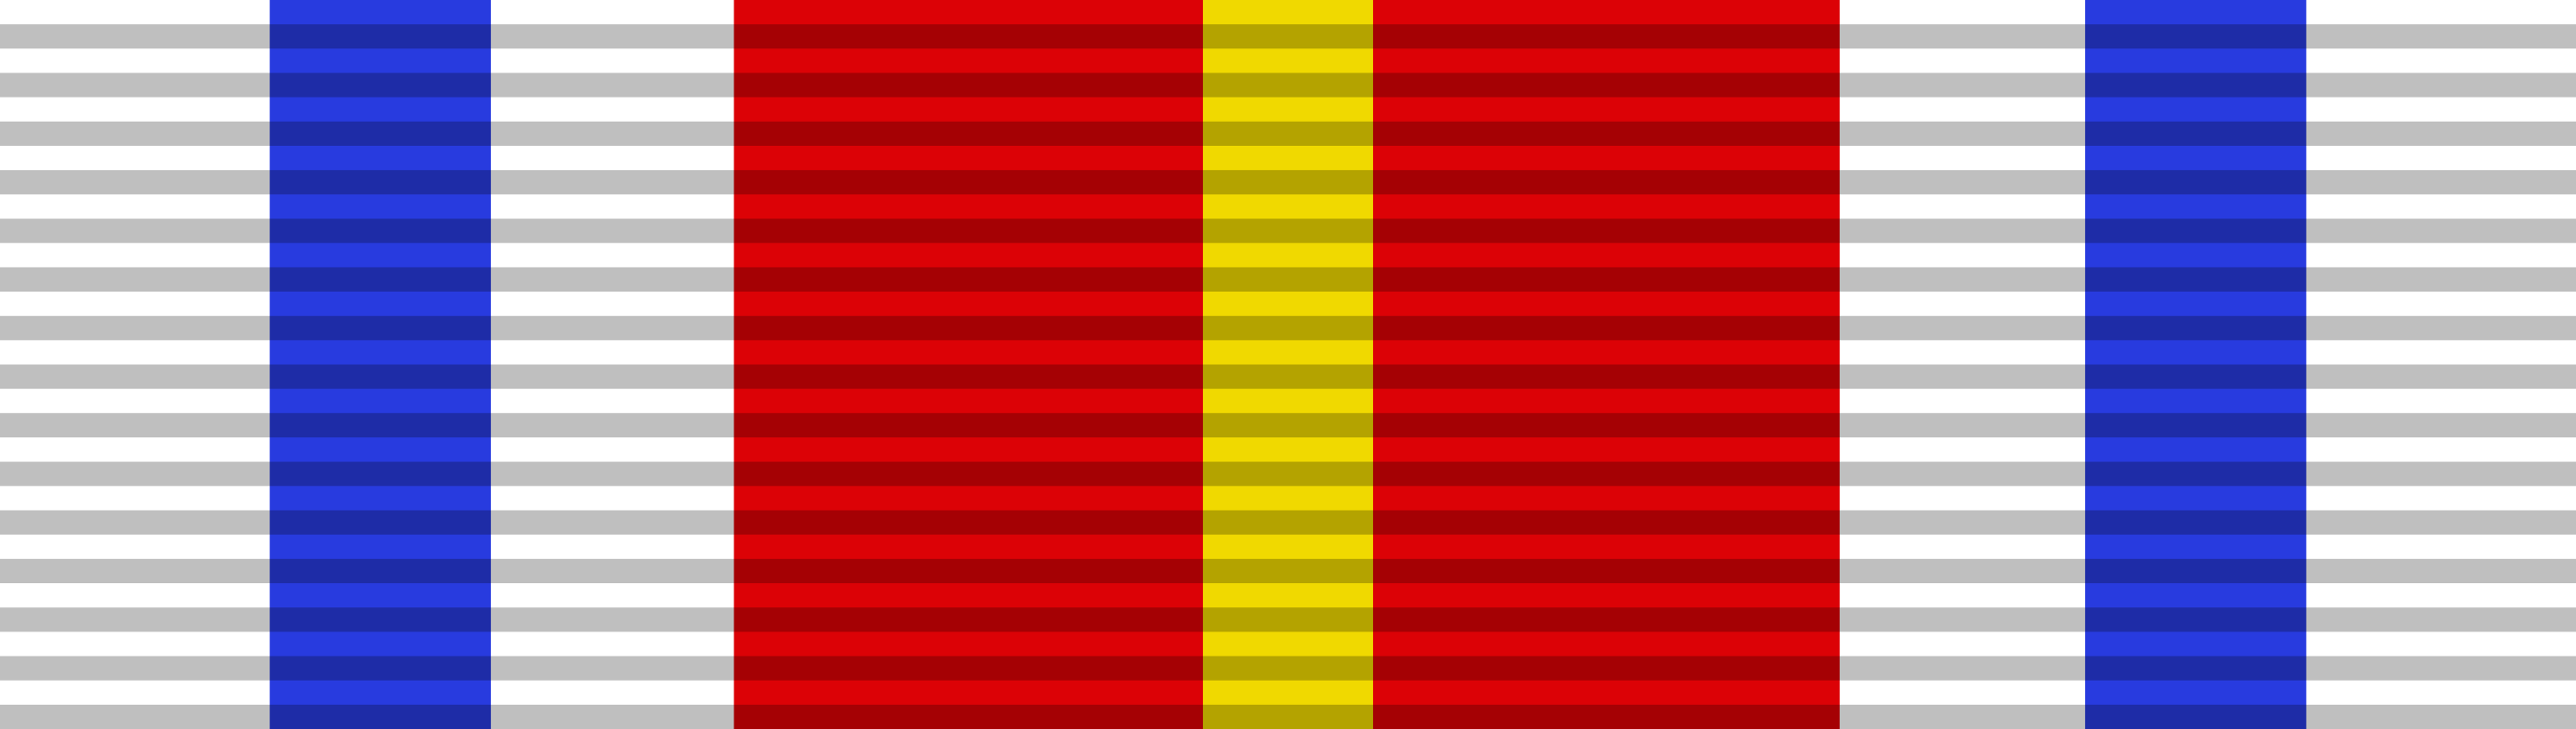 basic training honor graduate ribbon